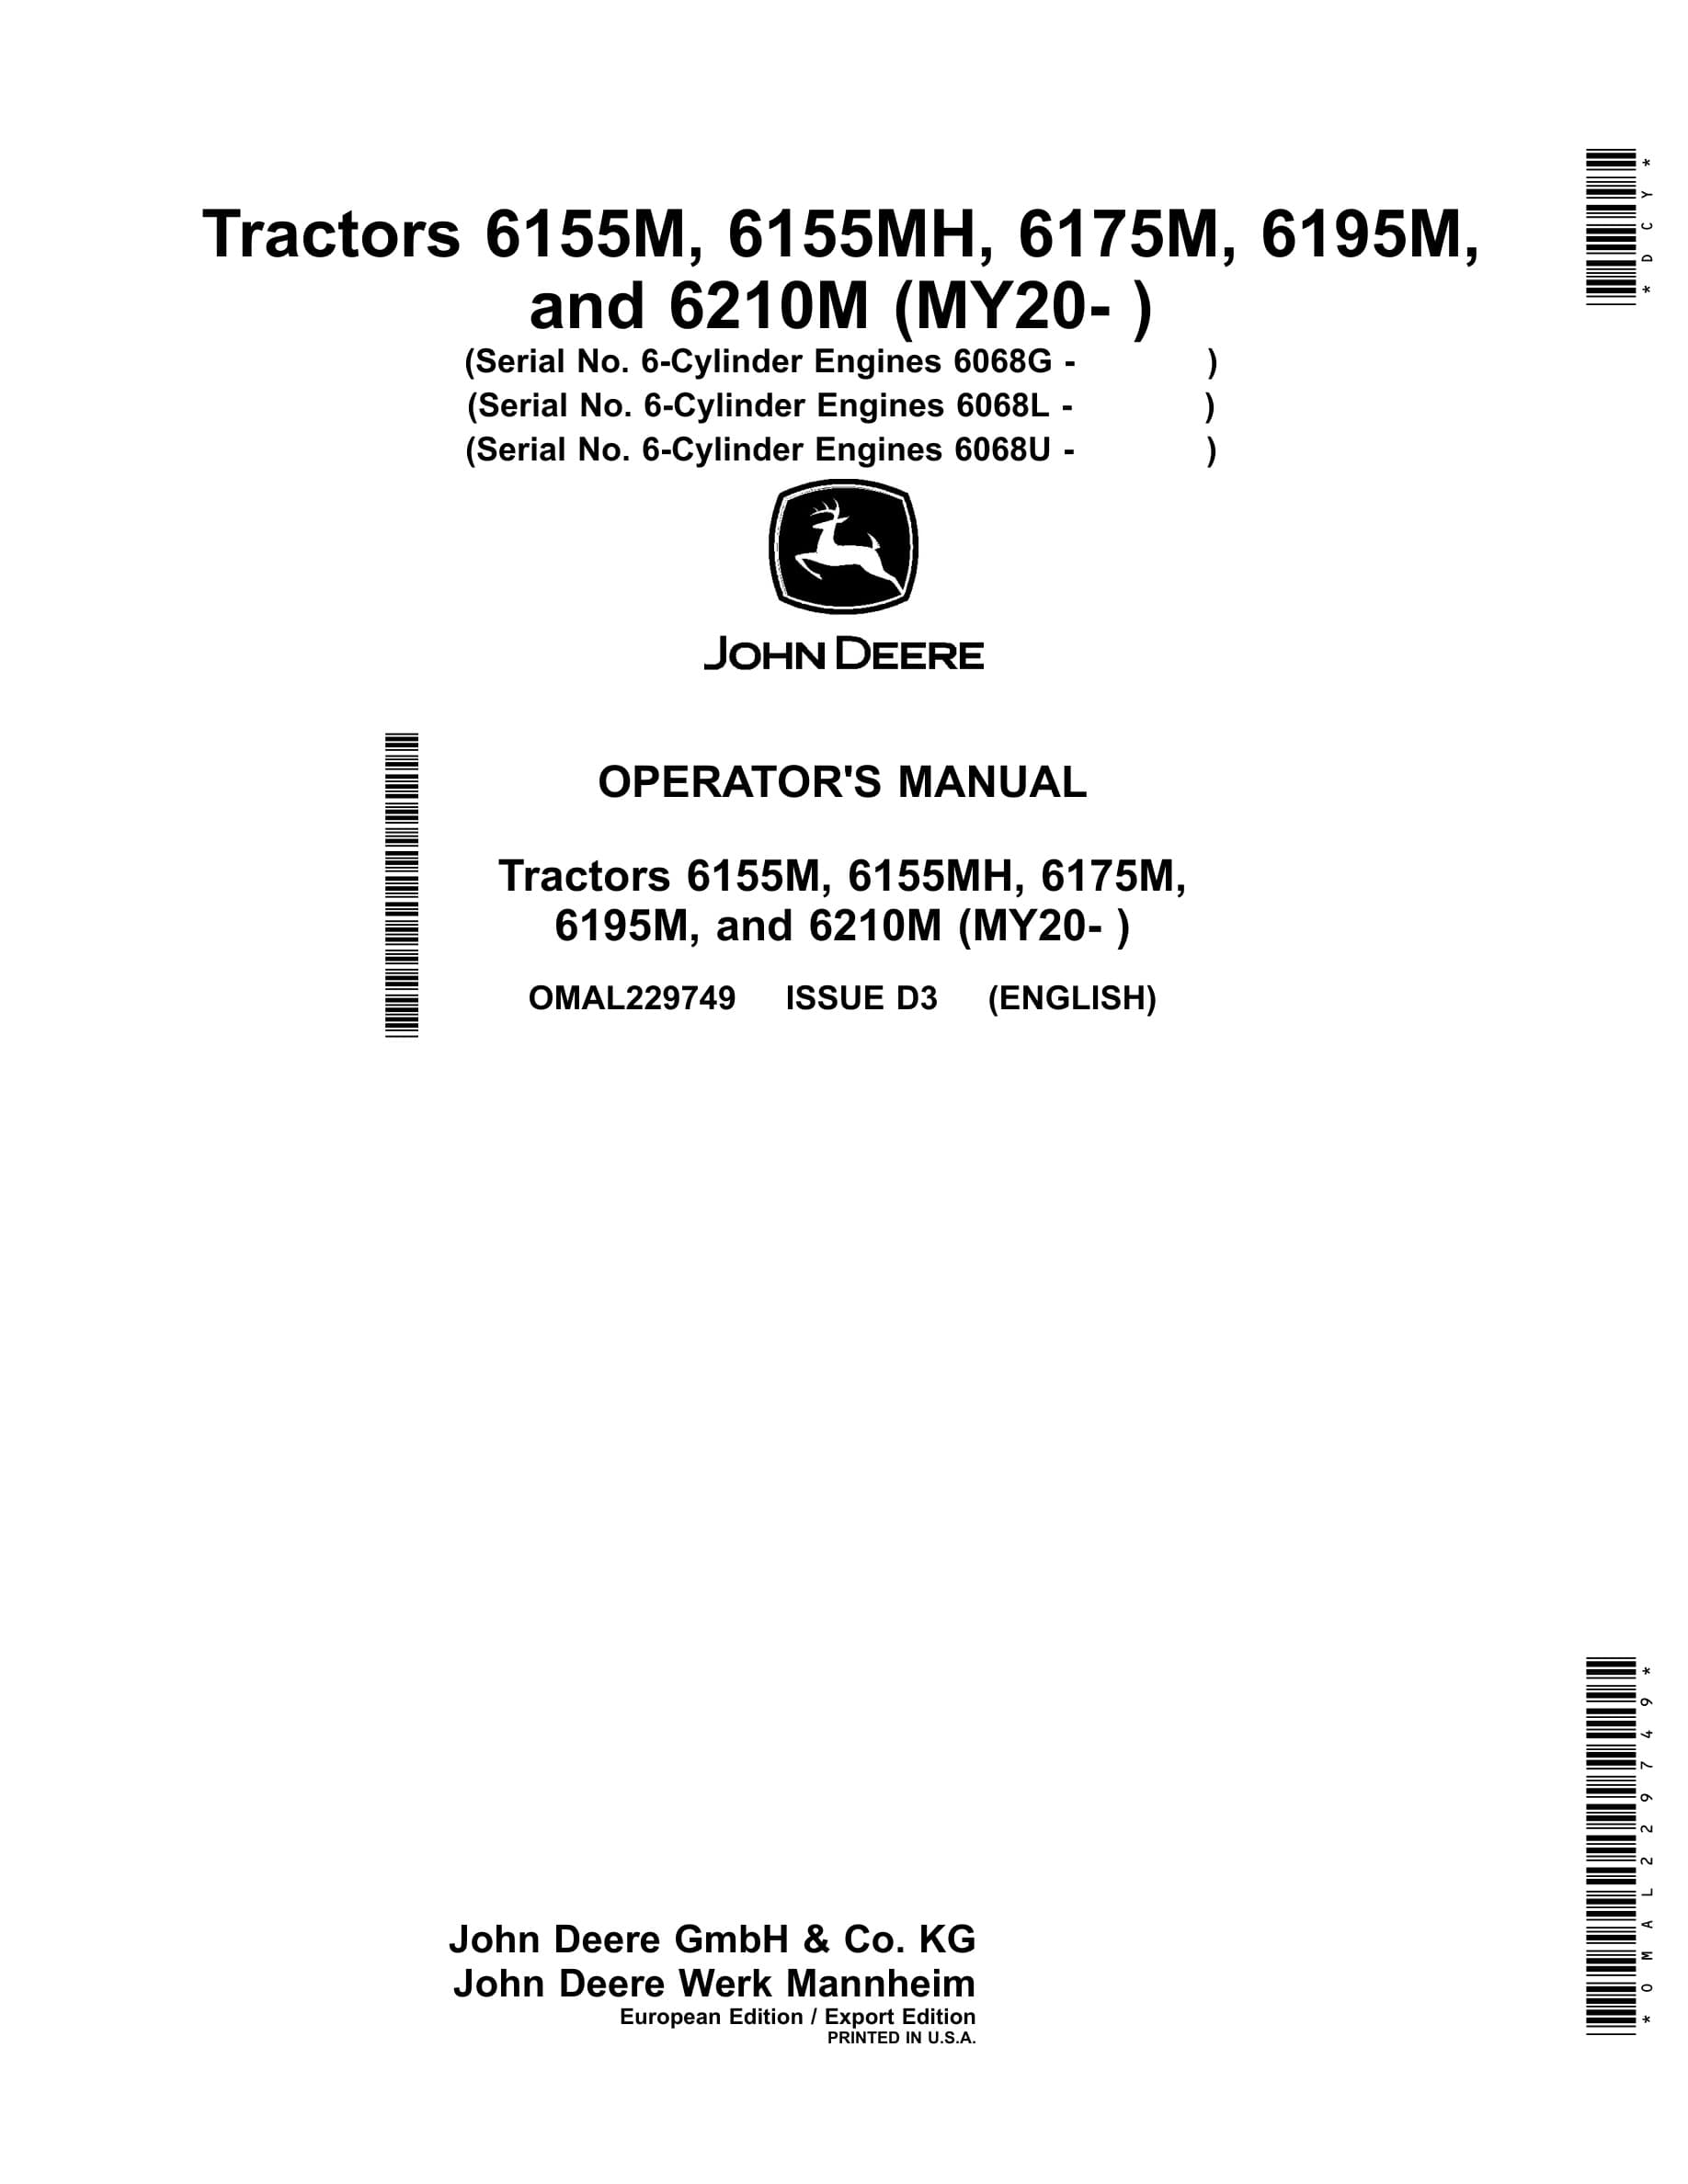 John Deere 6155m, 6155mh, 6175m, And 6195m (my20- ) Tractors Operator Manuals OMAL229749-1